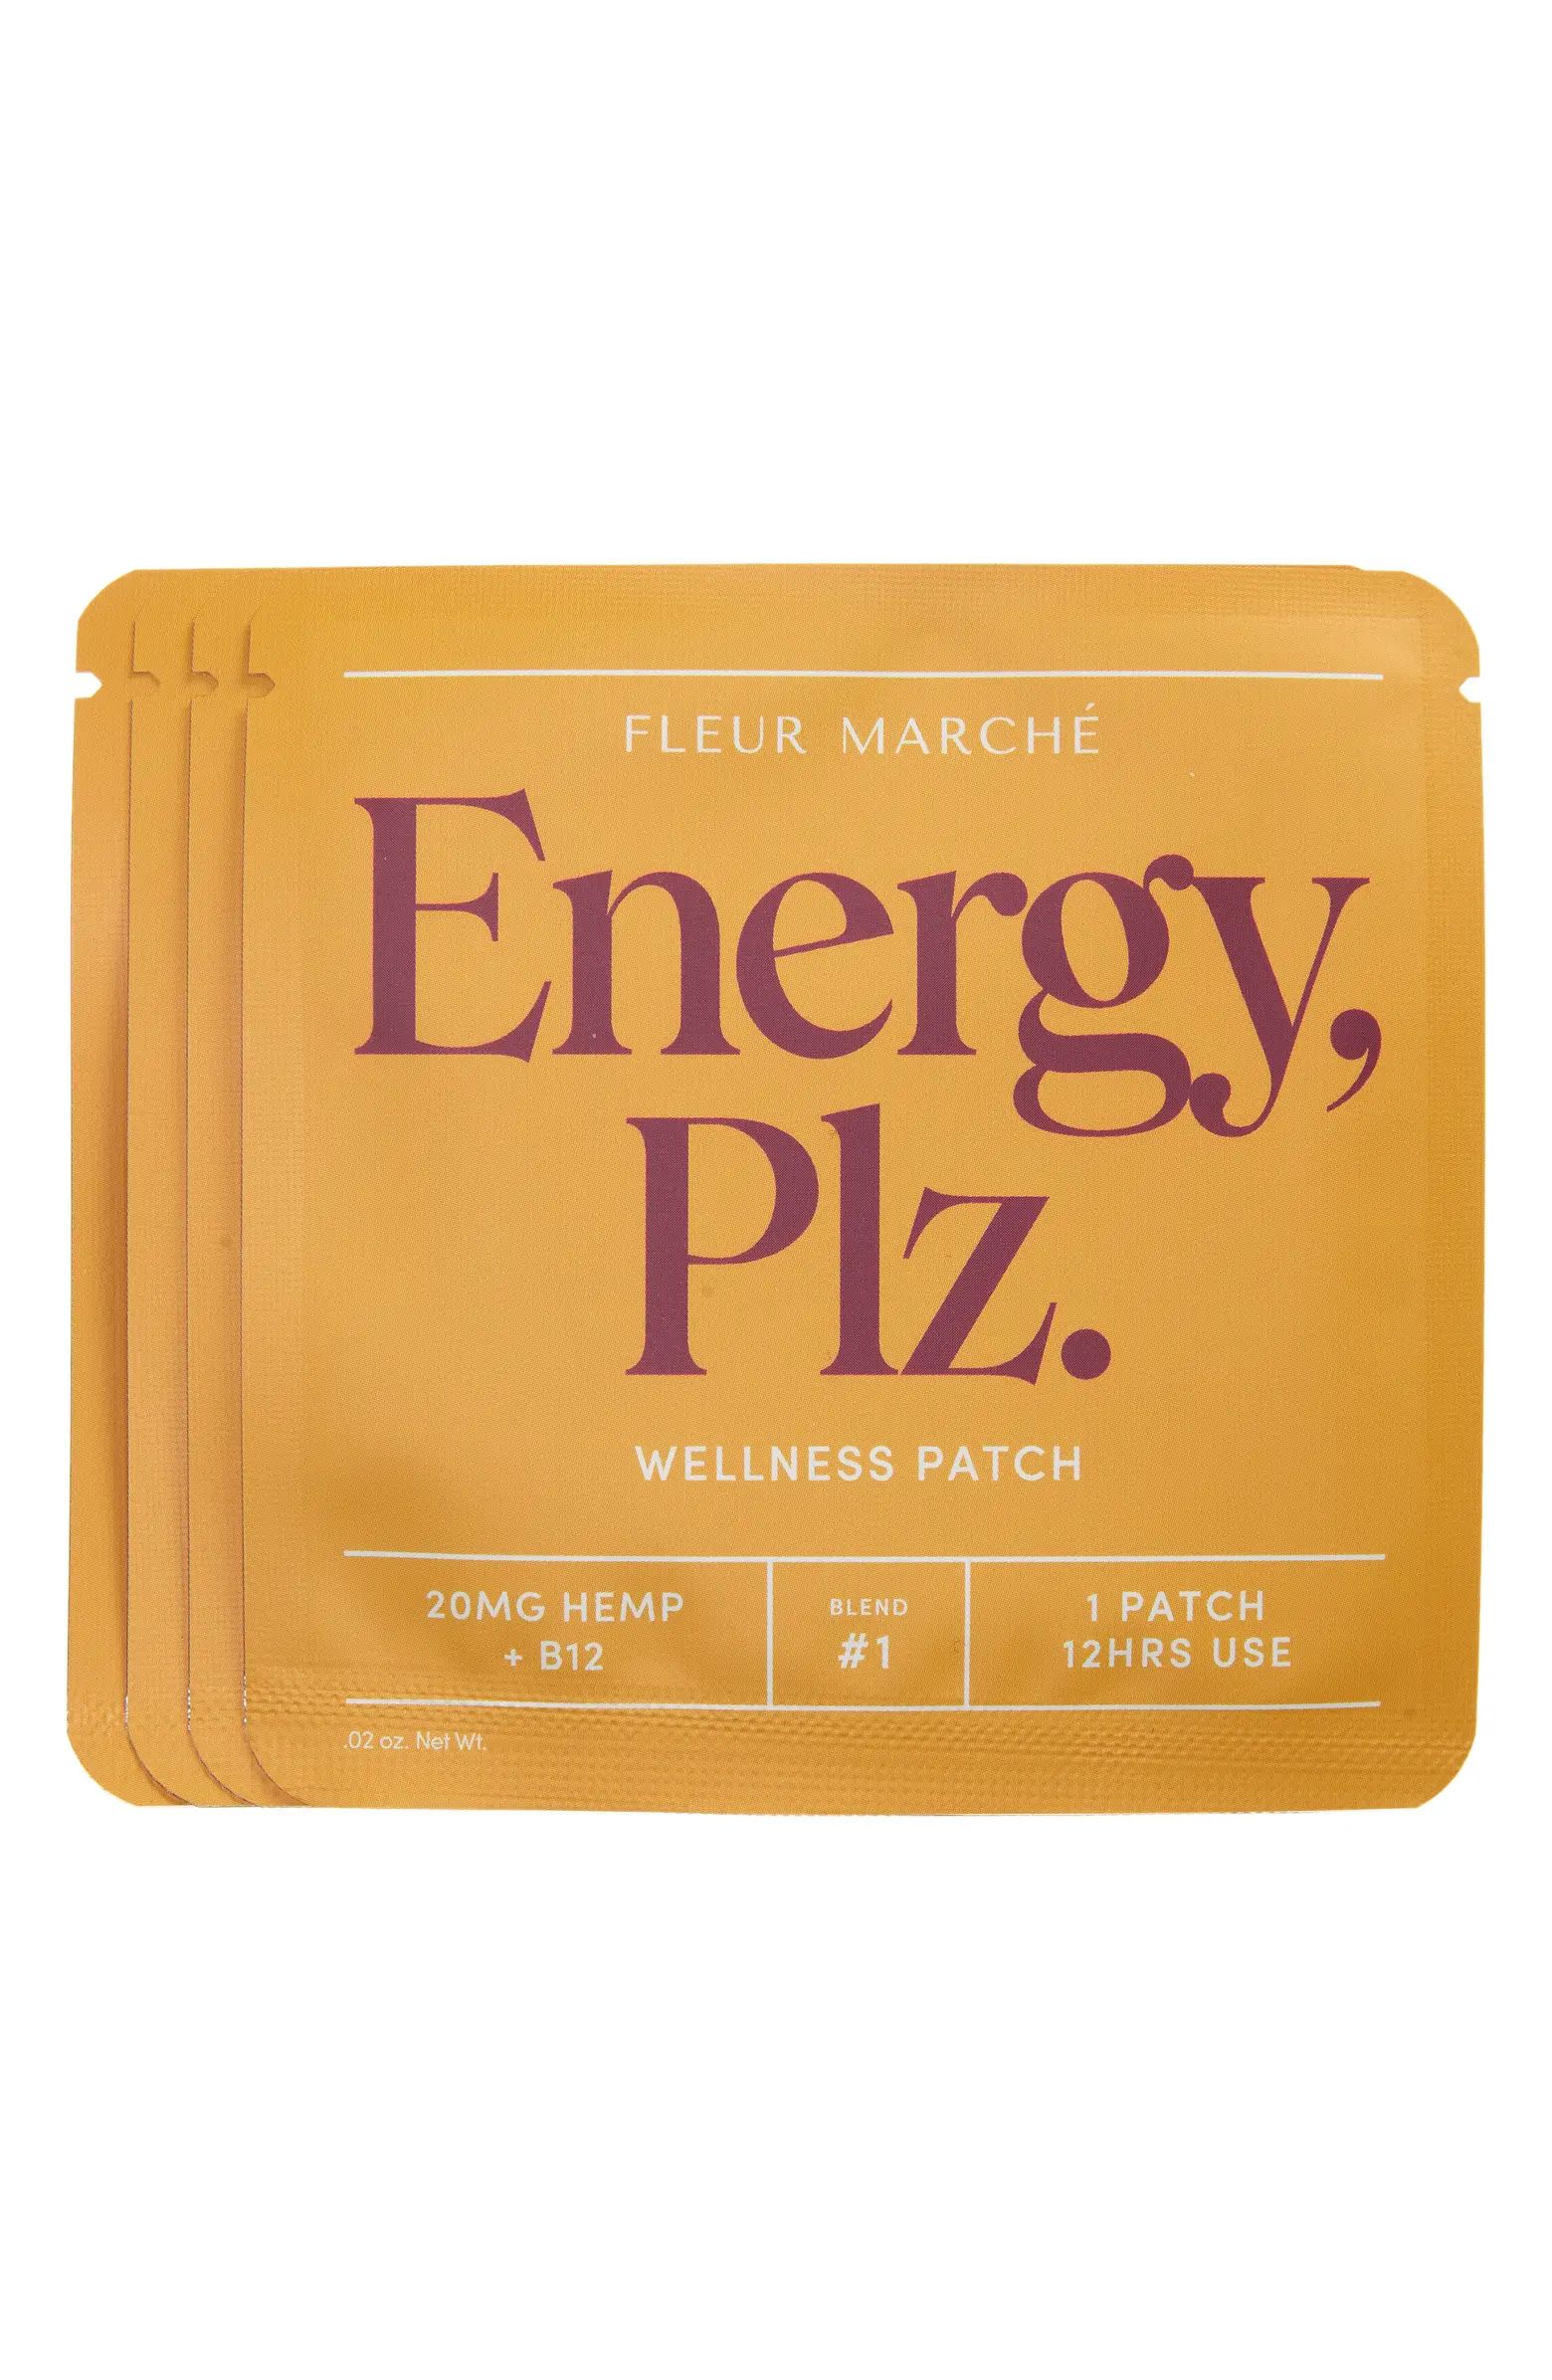 Fleur Marché Energy, Plz. Set of 4 CBD Hemp Wellness Patches | Nordstrom | Nordstrom